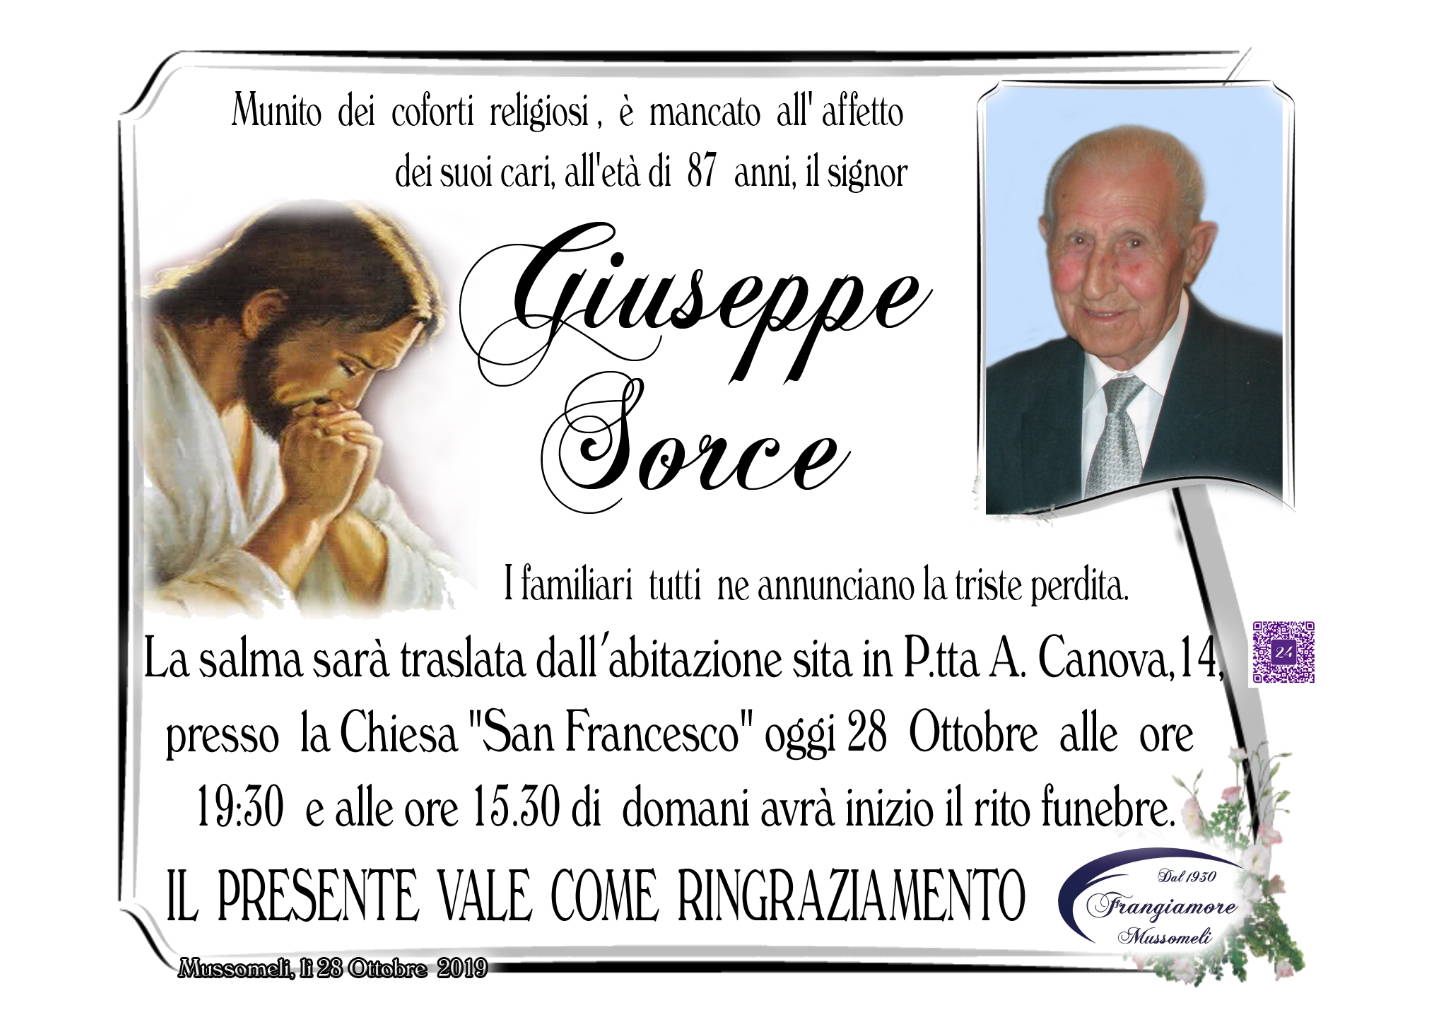 Giuseppe Sorce